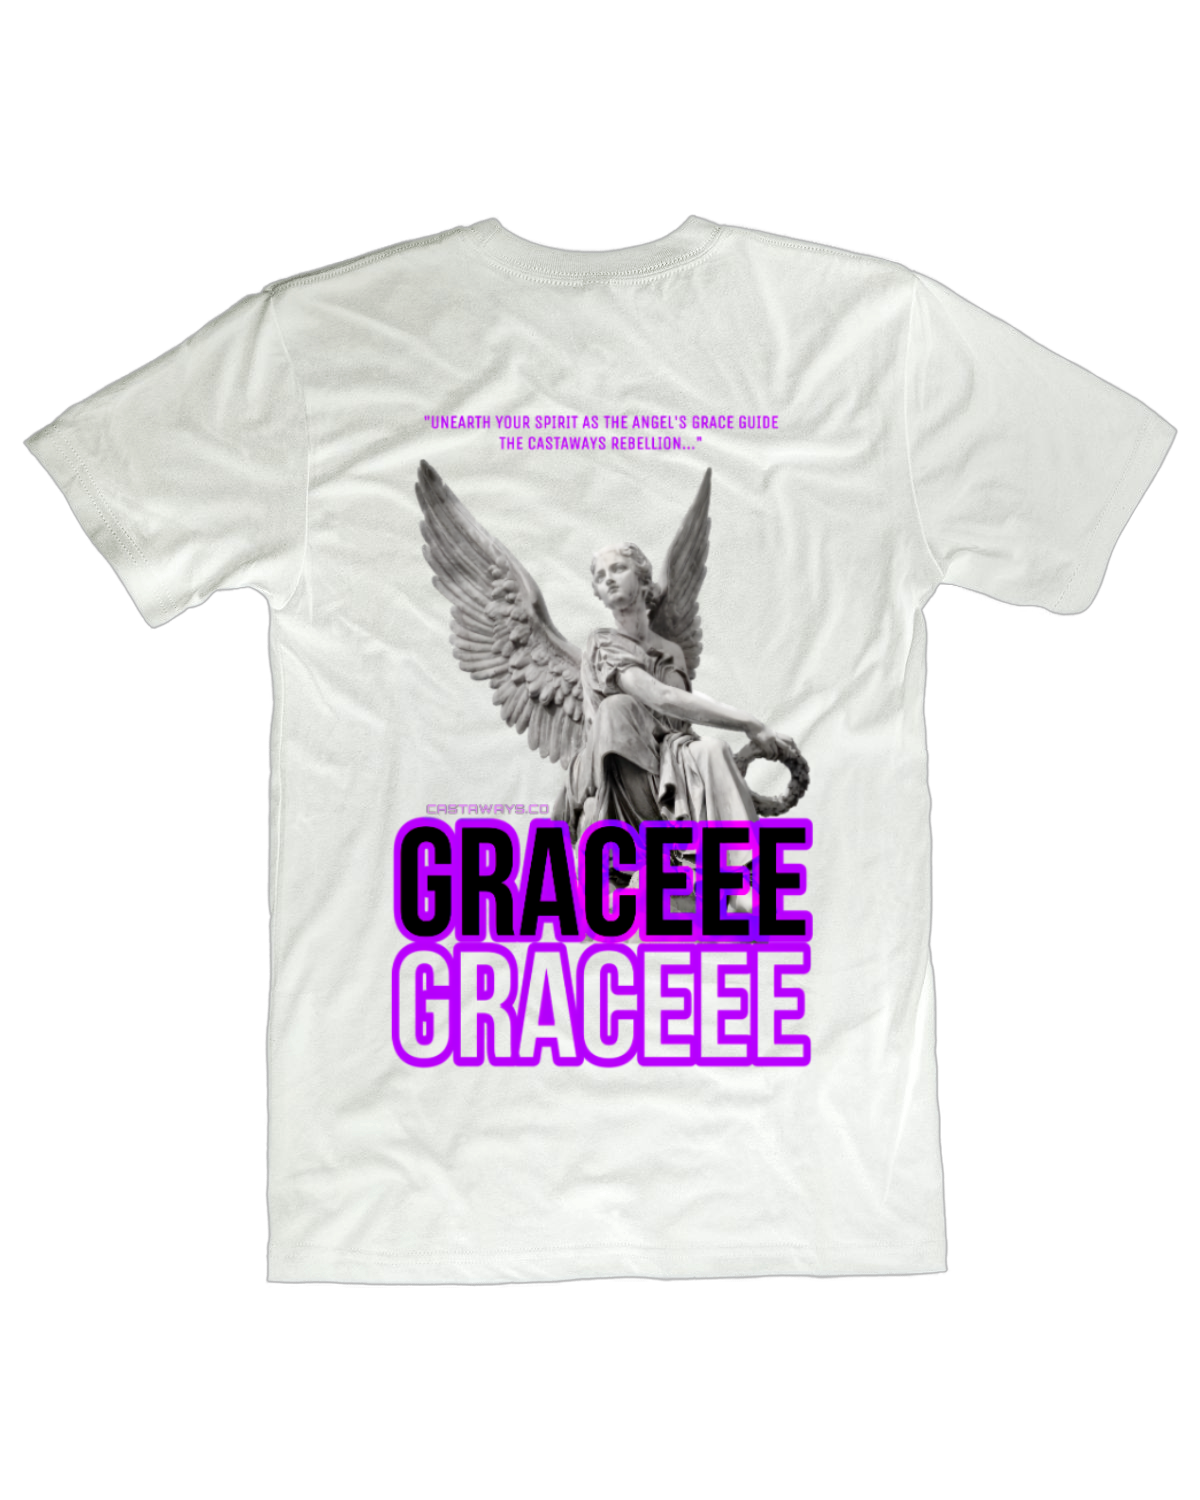 'Grace' graphic tee